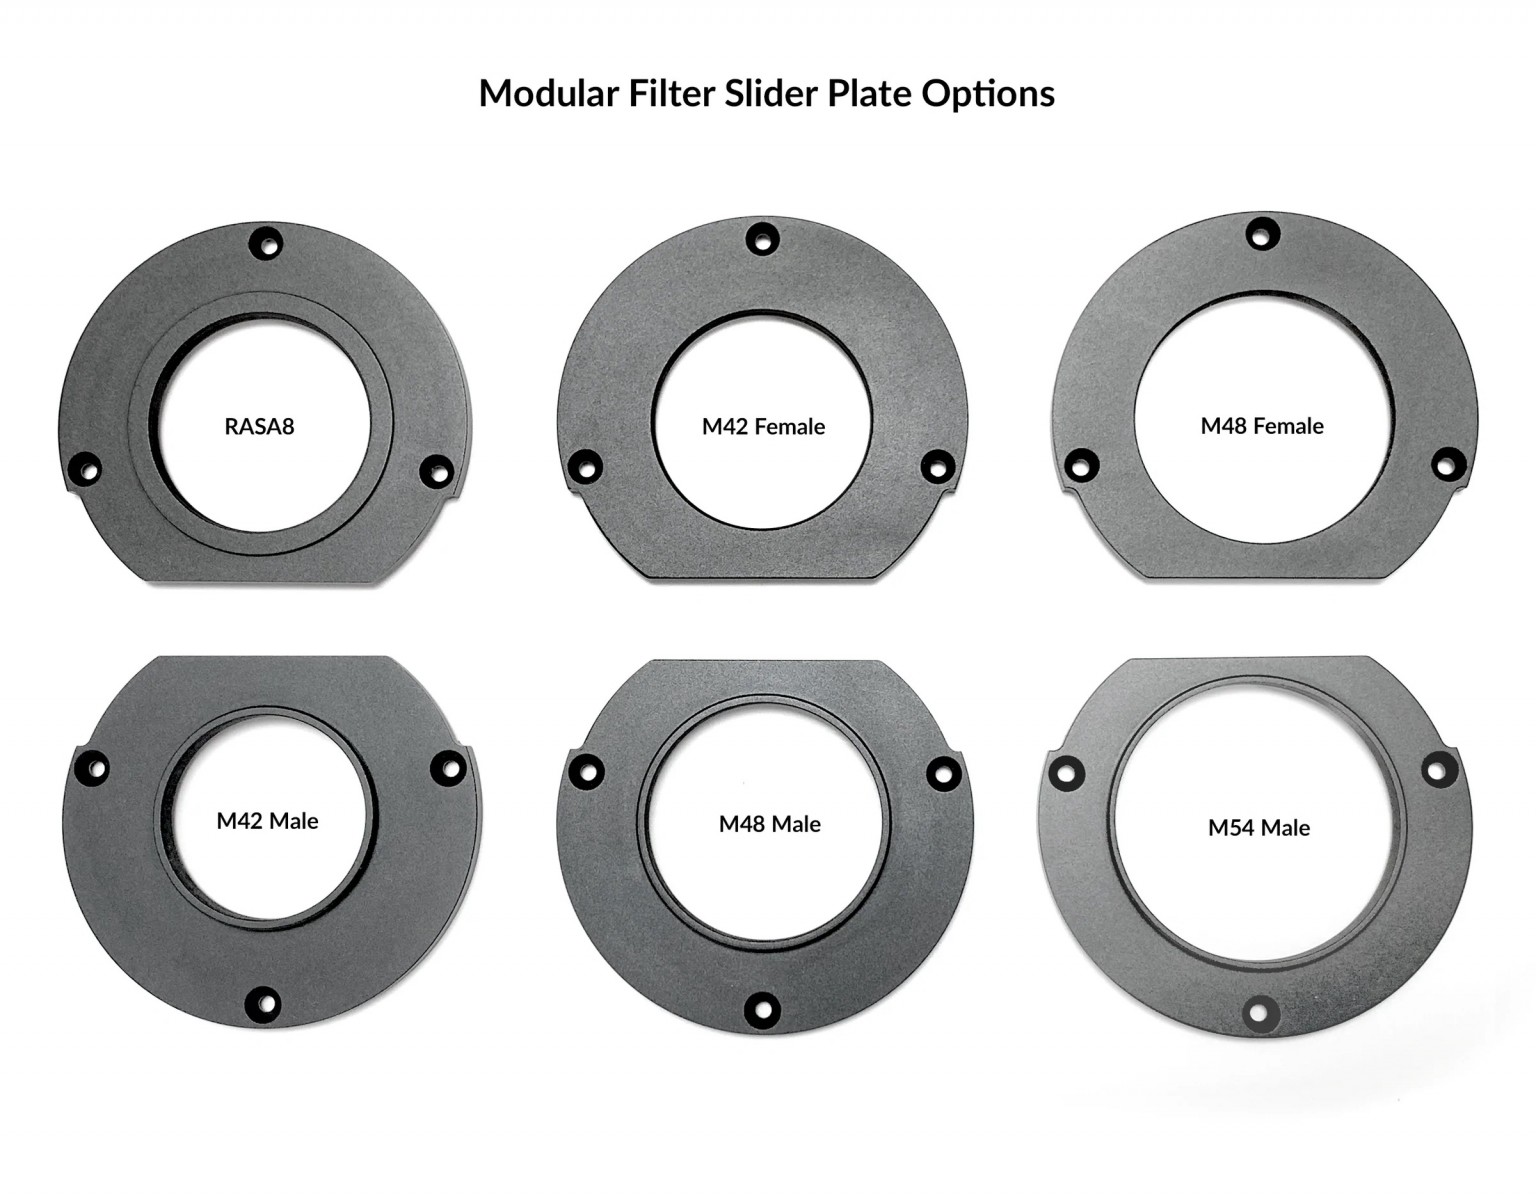 Starizona Modular Filter Slider Plate (M54 Male) 濾鏡抽屜盤